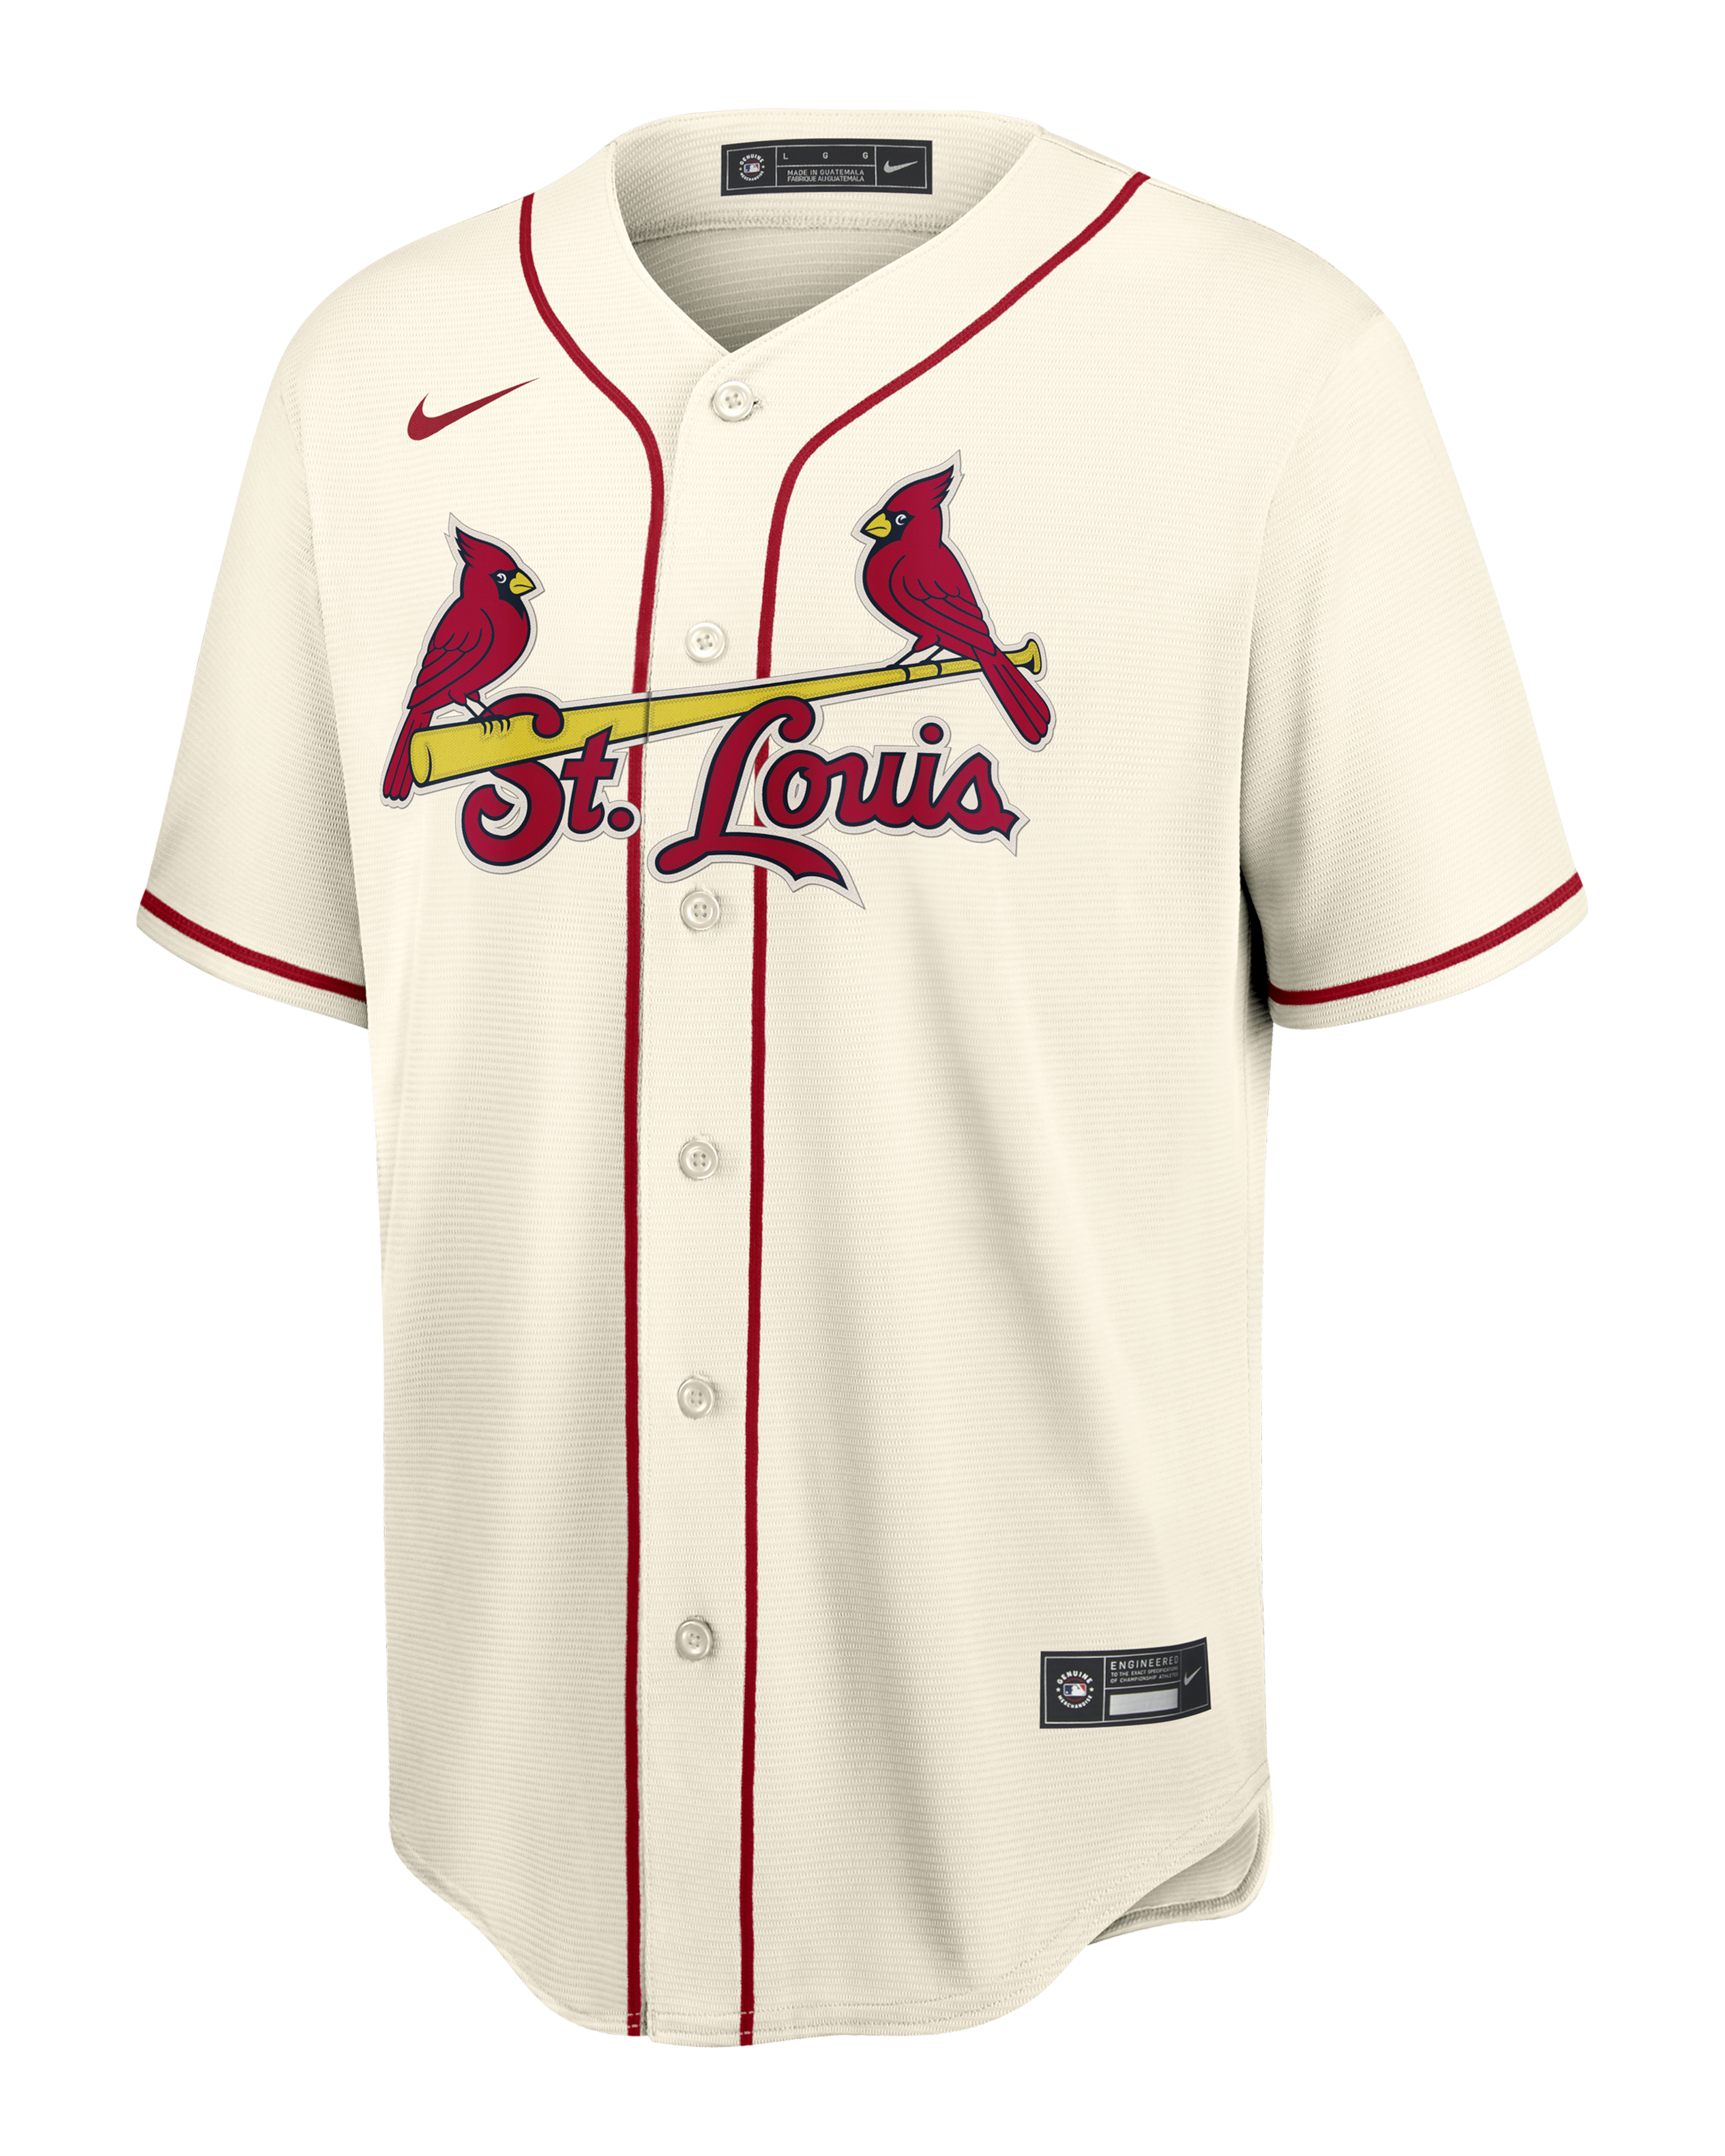 MLB St. Louis Cardinals (Paul Goldschmidt) Men's Replica Baseball